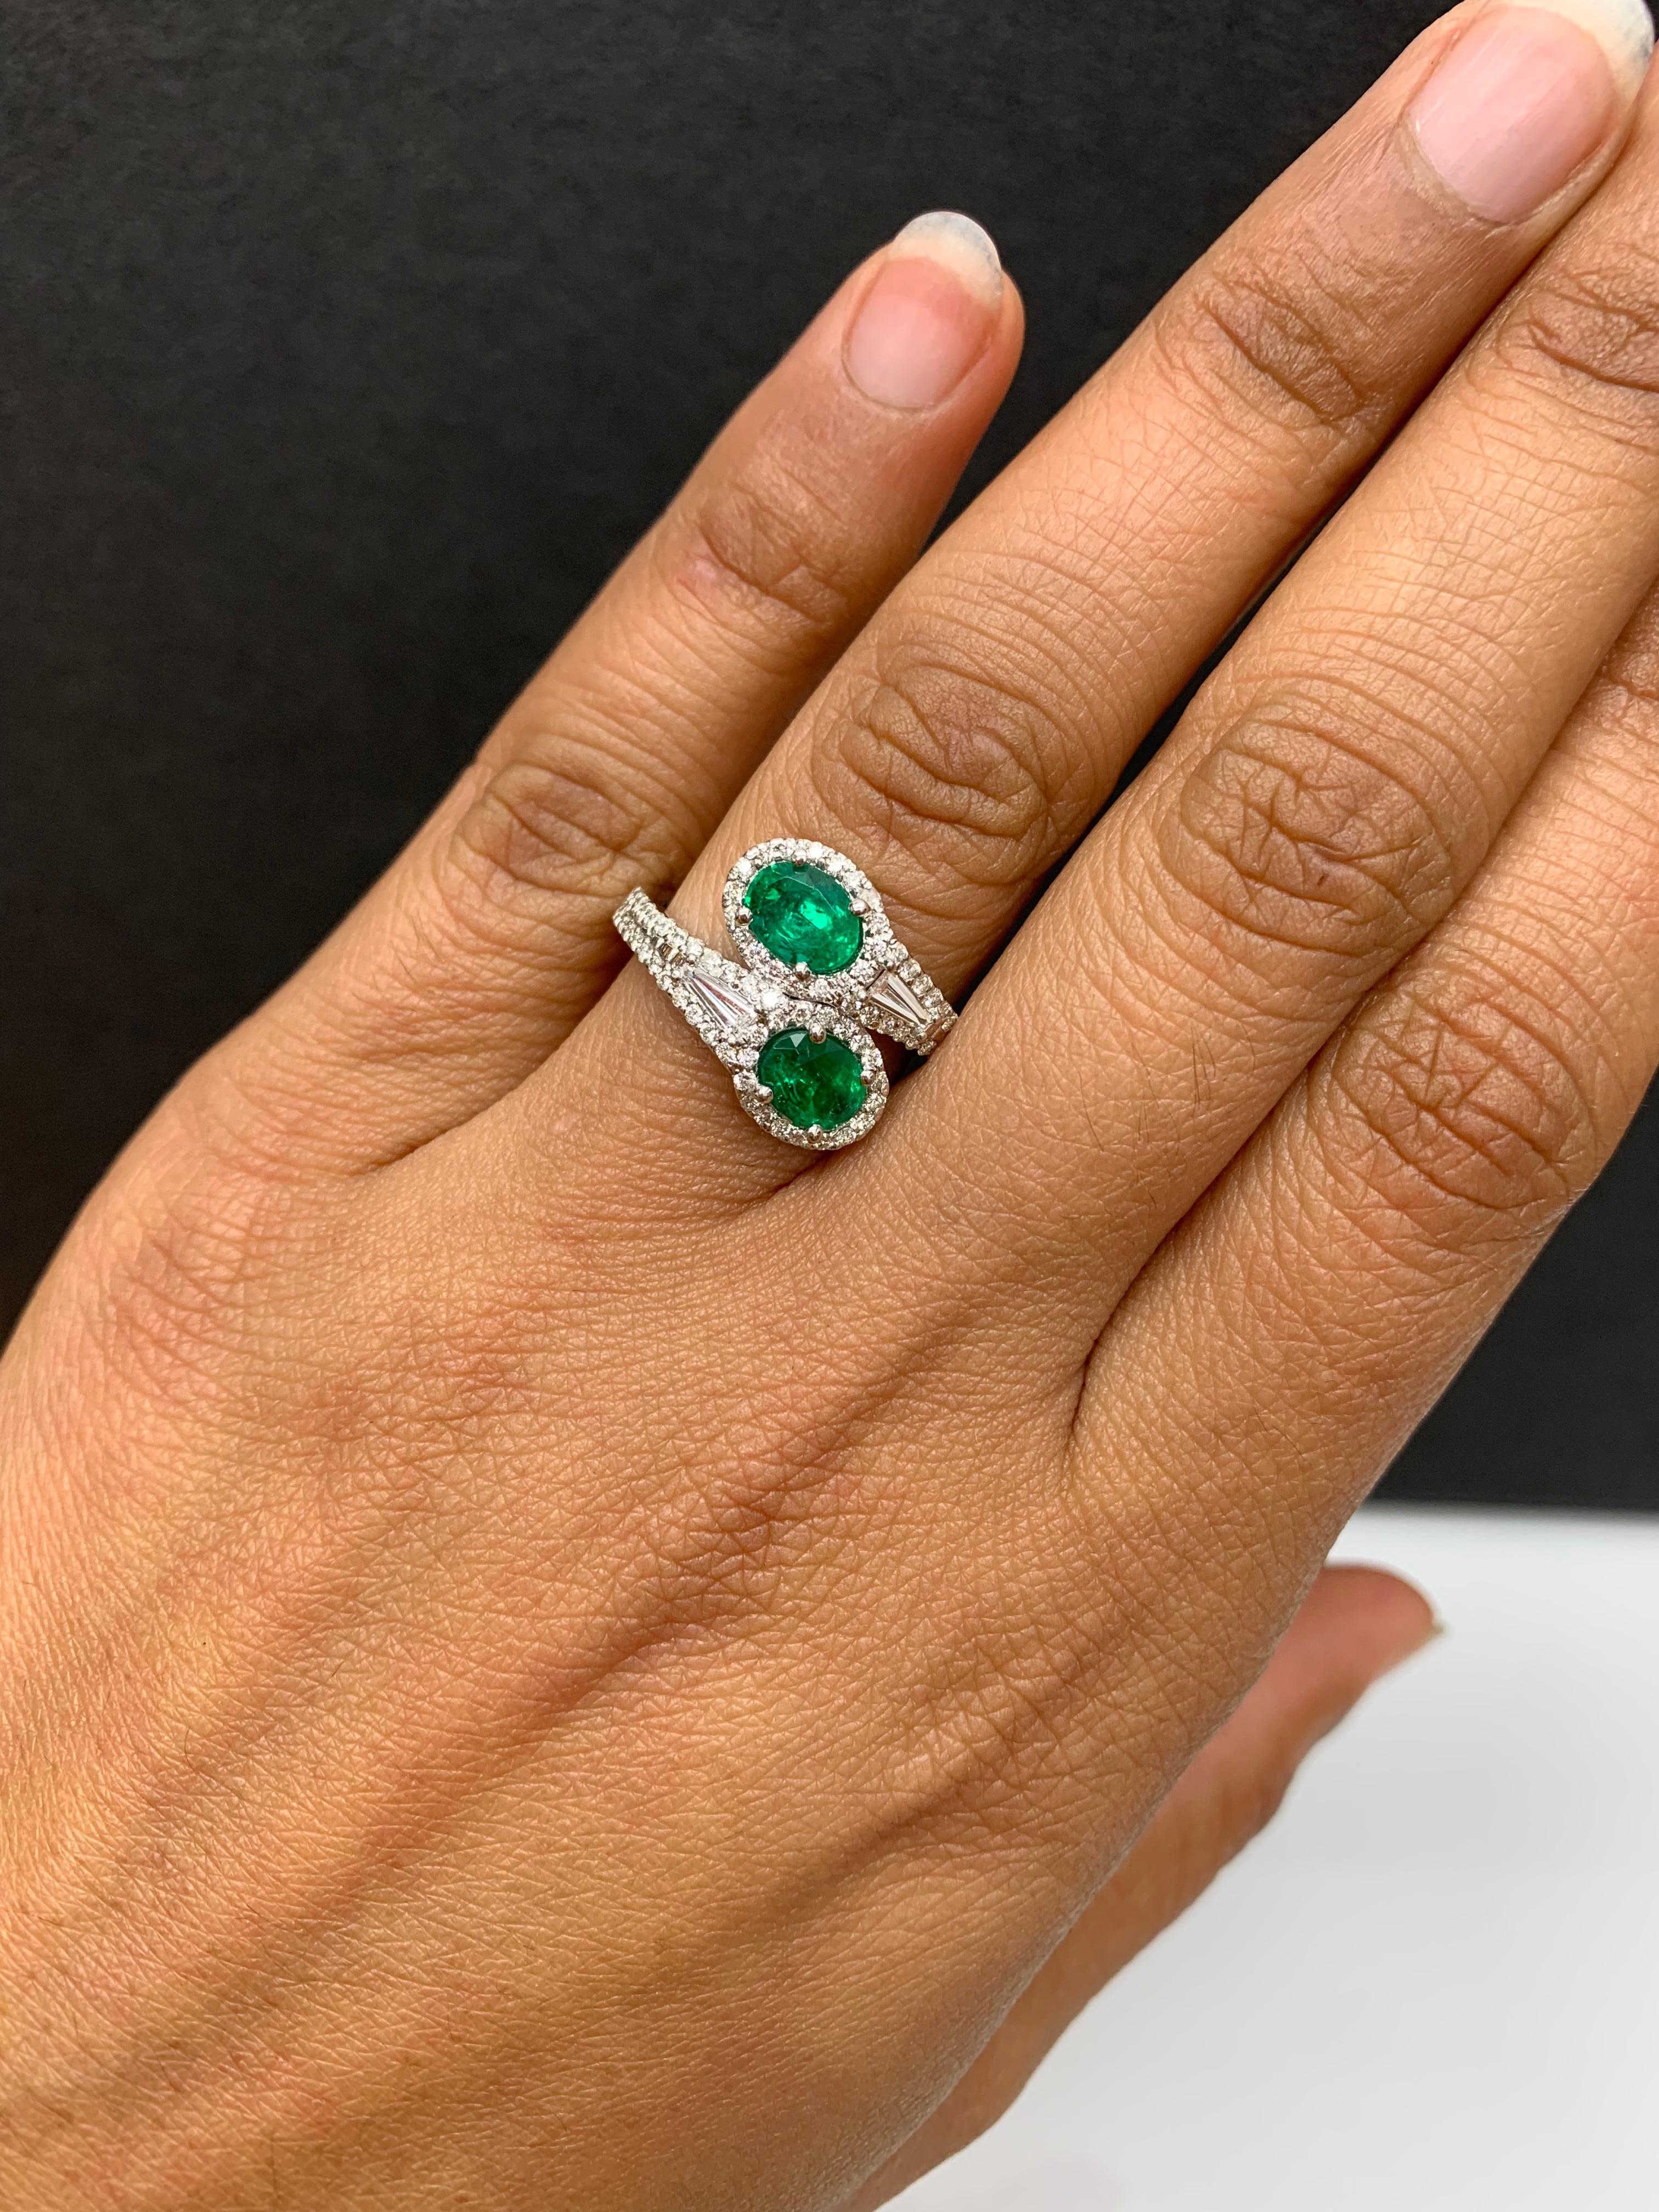 Modern 1.52 Carat Oval Cut Emerald Diamond Toi et Moi Engagement Ring 14K White Gold For Sale